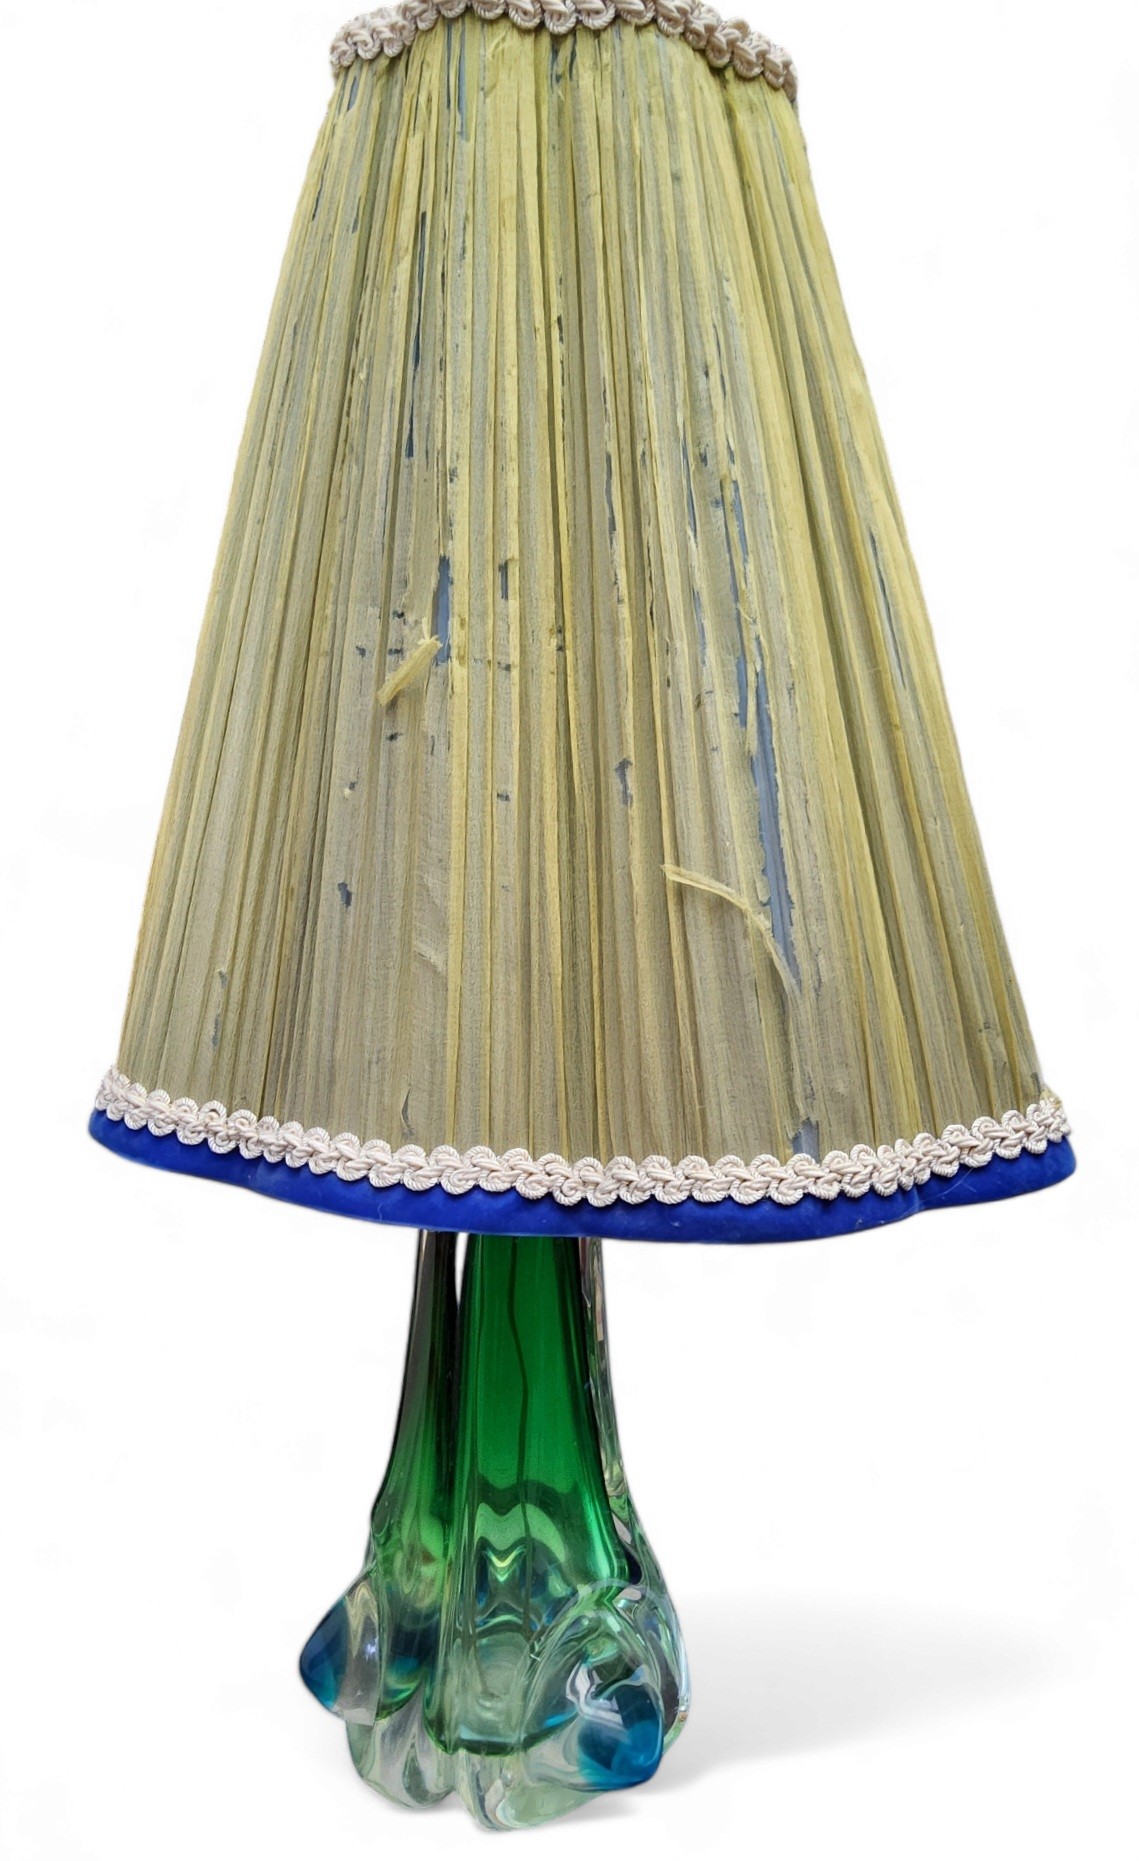 A Mid 20th century Italian glass table lamp, c.1970